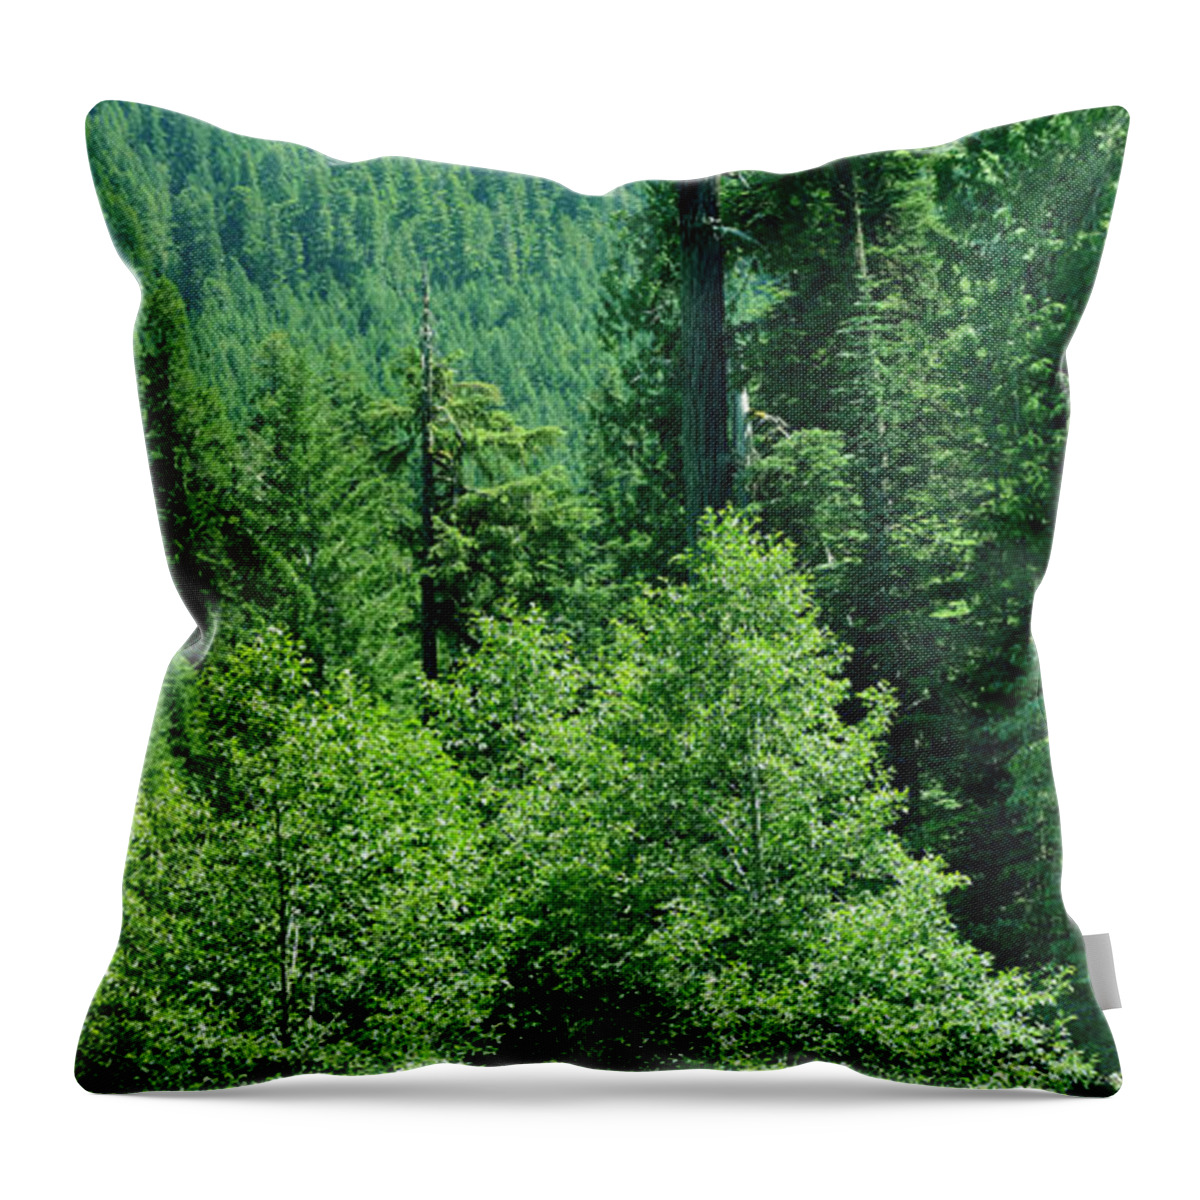 Helens Throw Pillow featuring the photograph Green conifer forest on steep hillside by Steve Estvanik